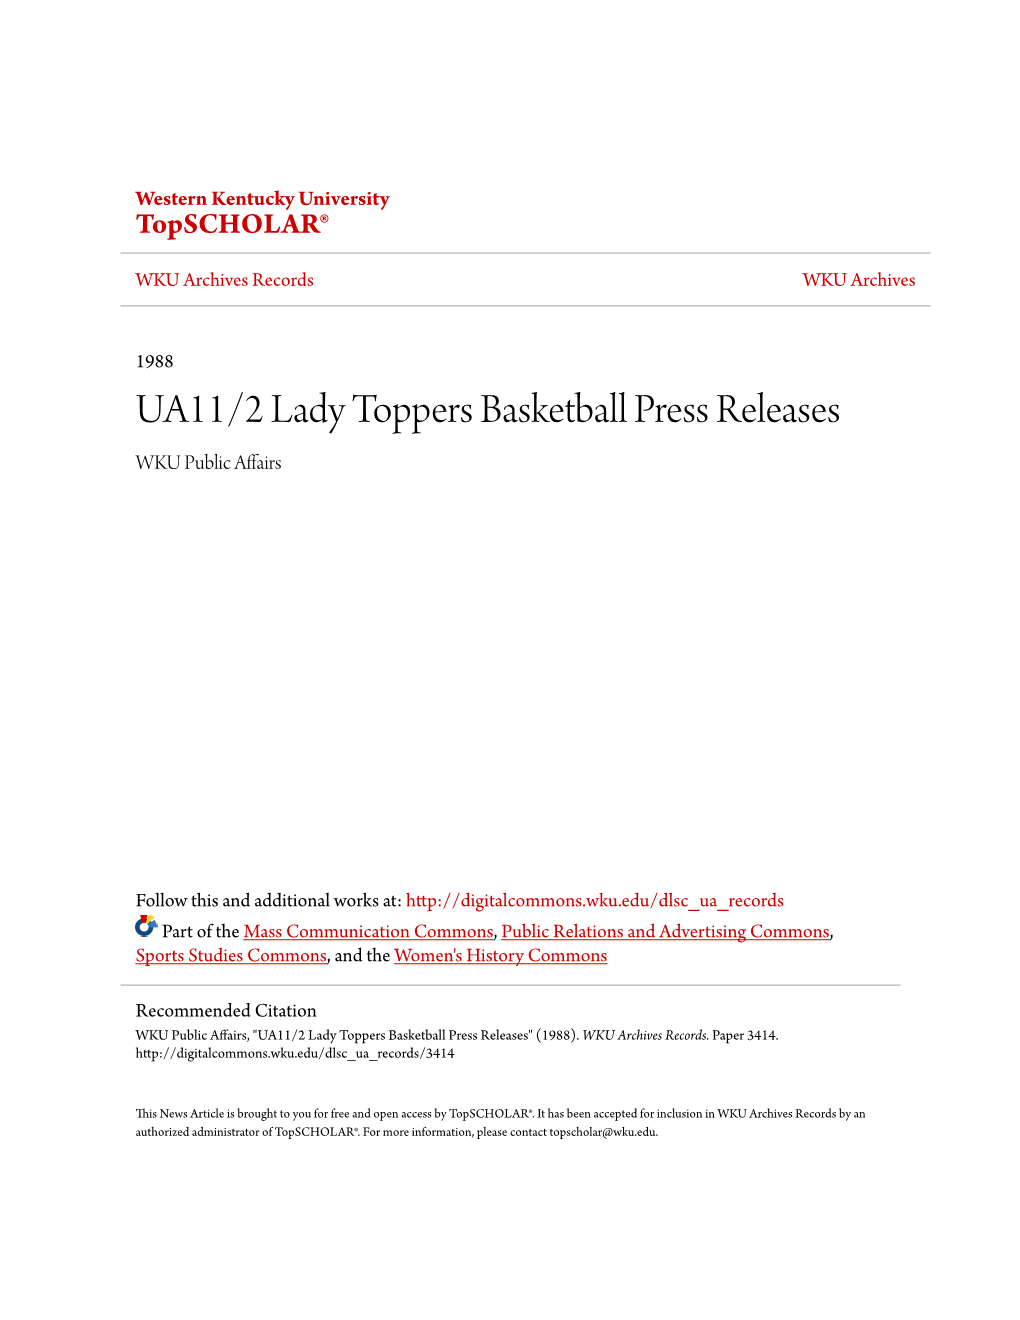 UA11/2 Lady Toppers Basketball Press Releases WKU Public Affairs